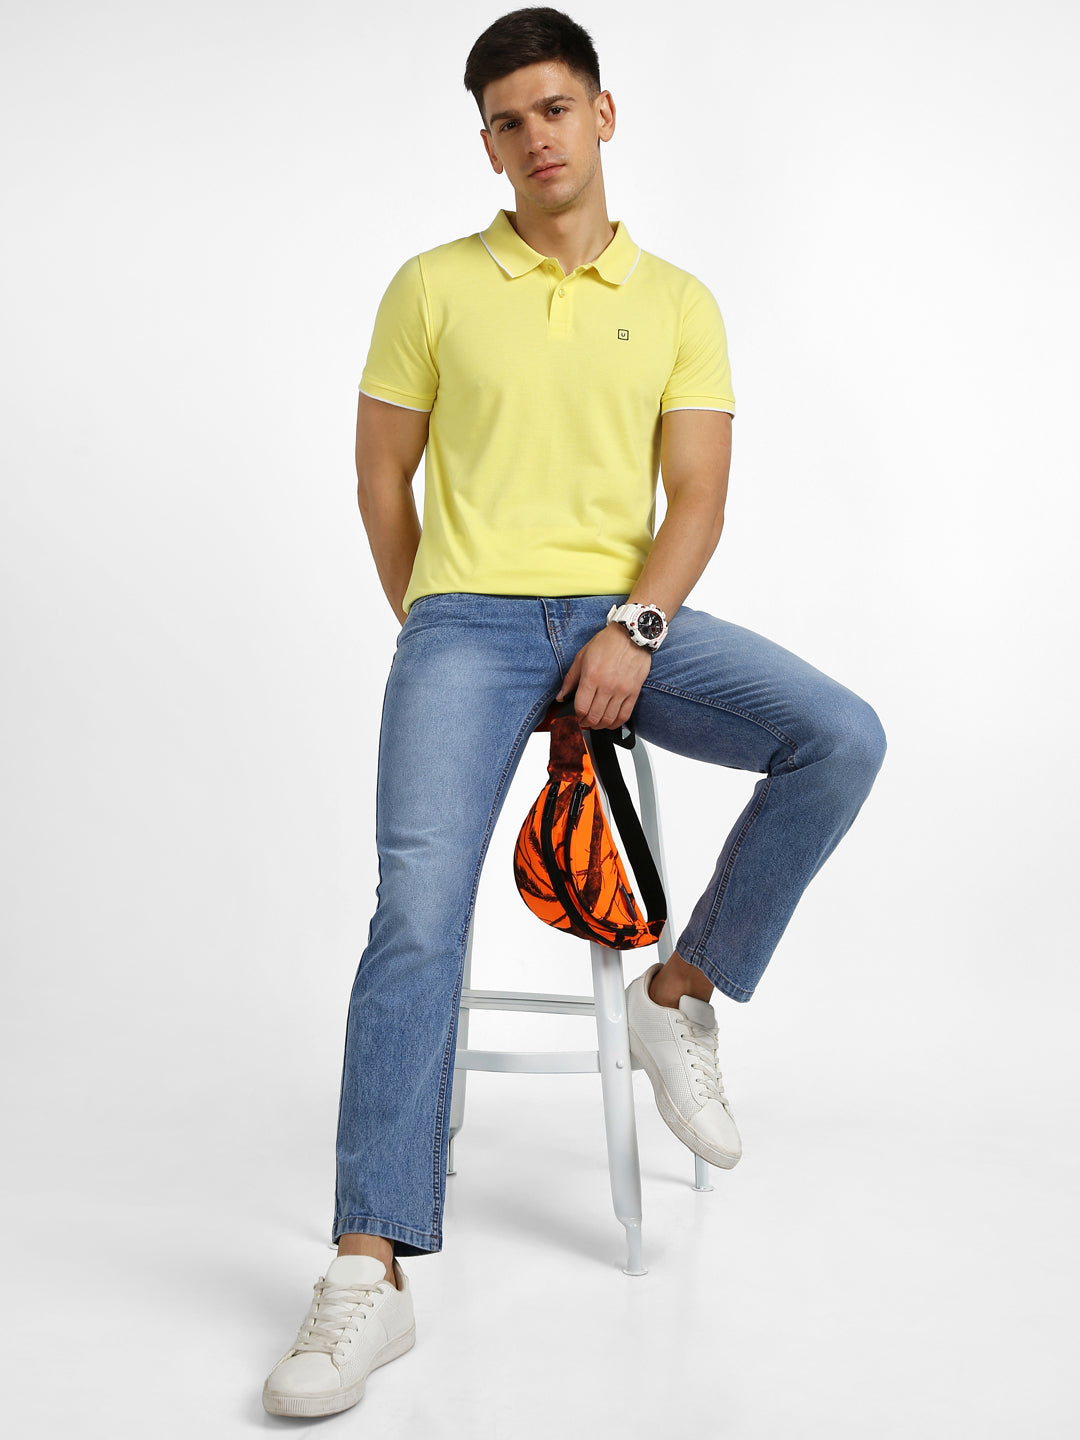 Urbano Fashion Men's Yellow Solid Slim Fit Half Sleeve Cotton Polo T-Shirt